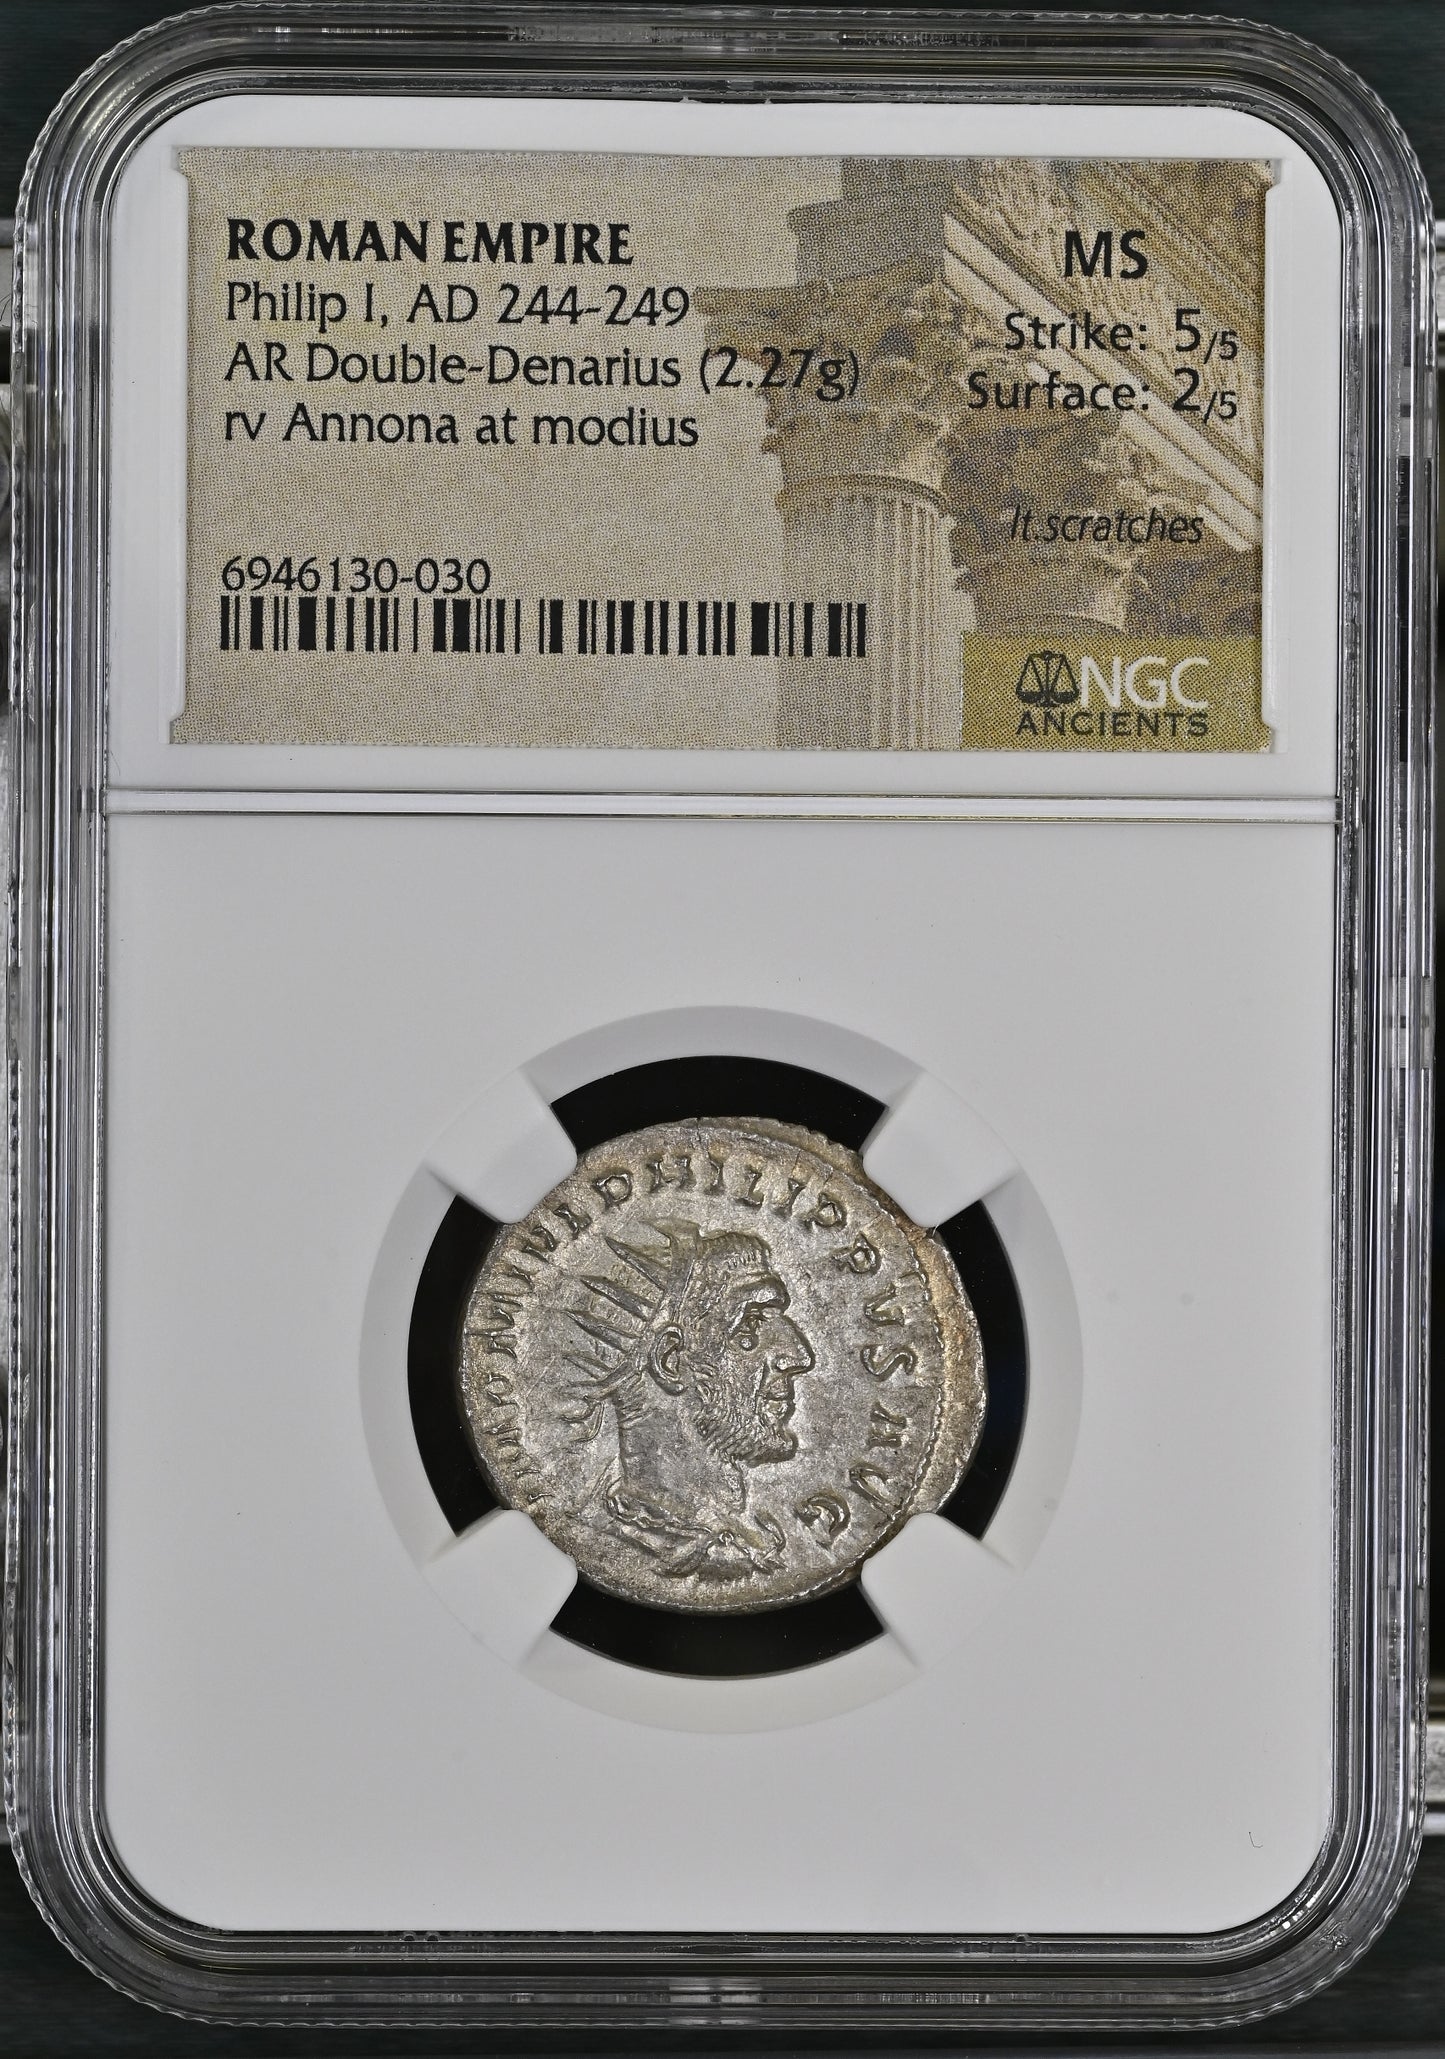 Roman Empire - Philip I - Silver Double-Denarius - NGC MS - RIC:28c